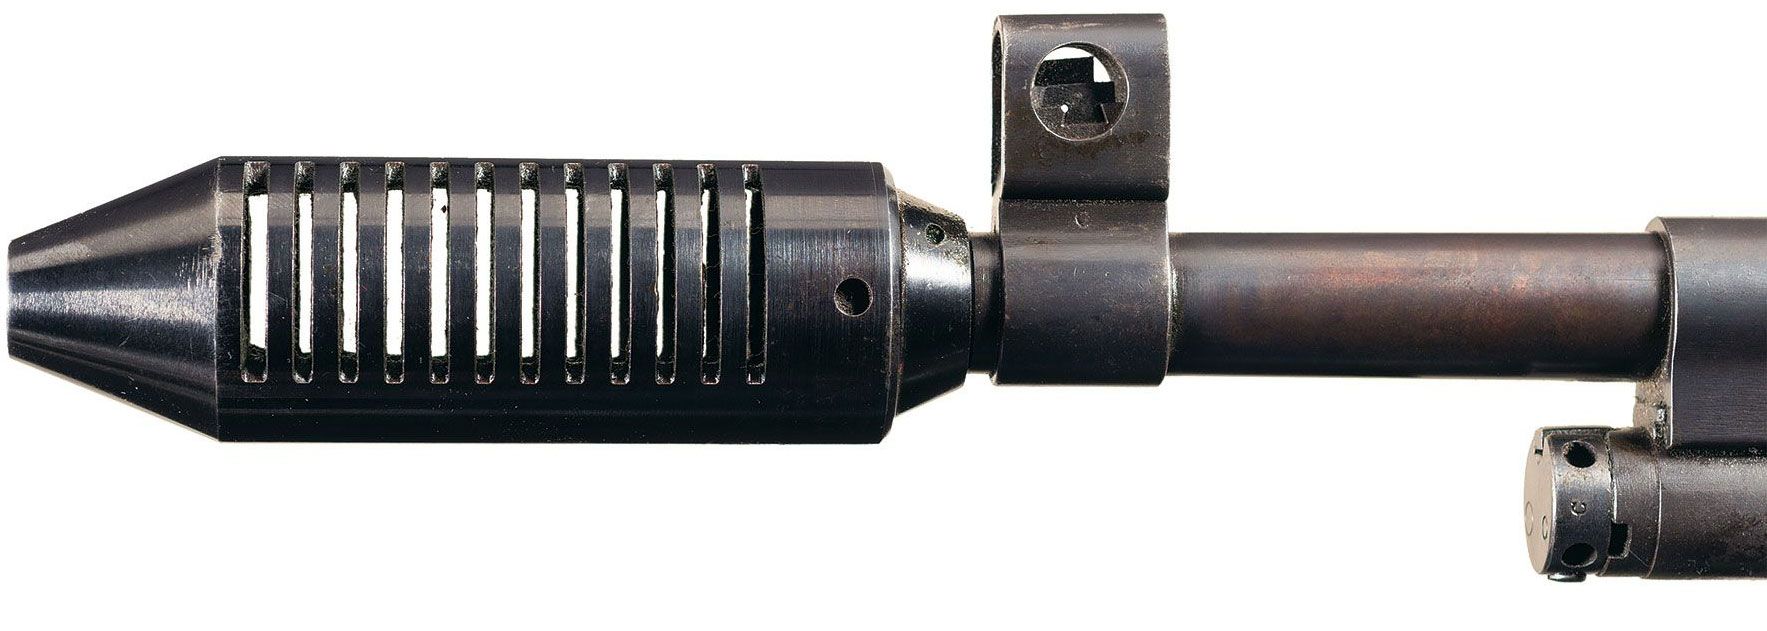 muzzle-on-colt-R80-monitor-machine-gun